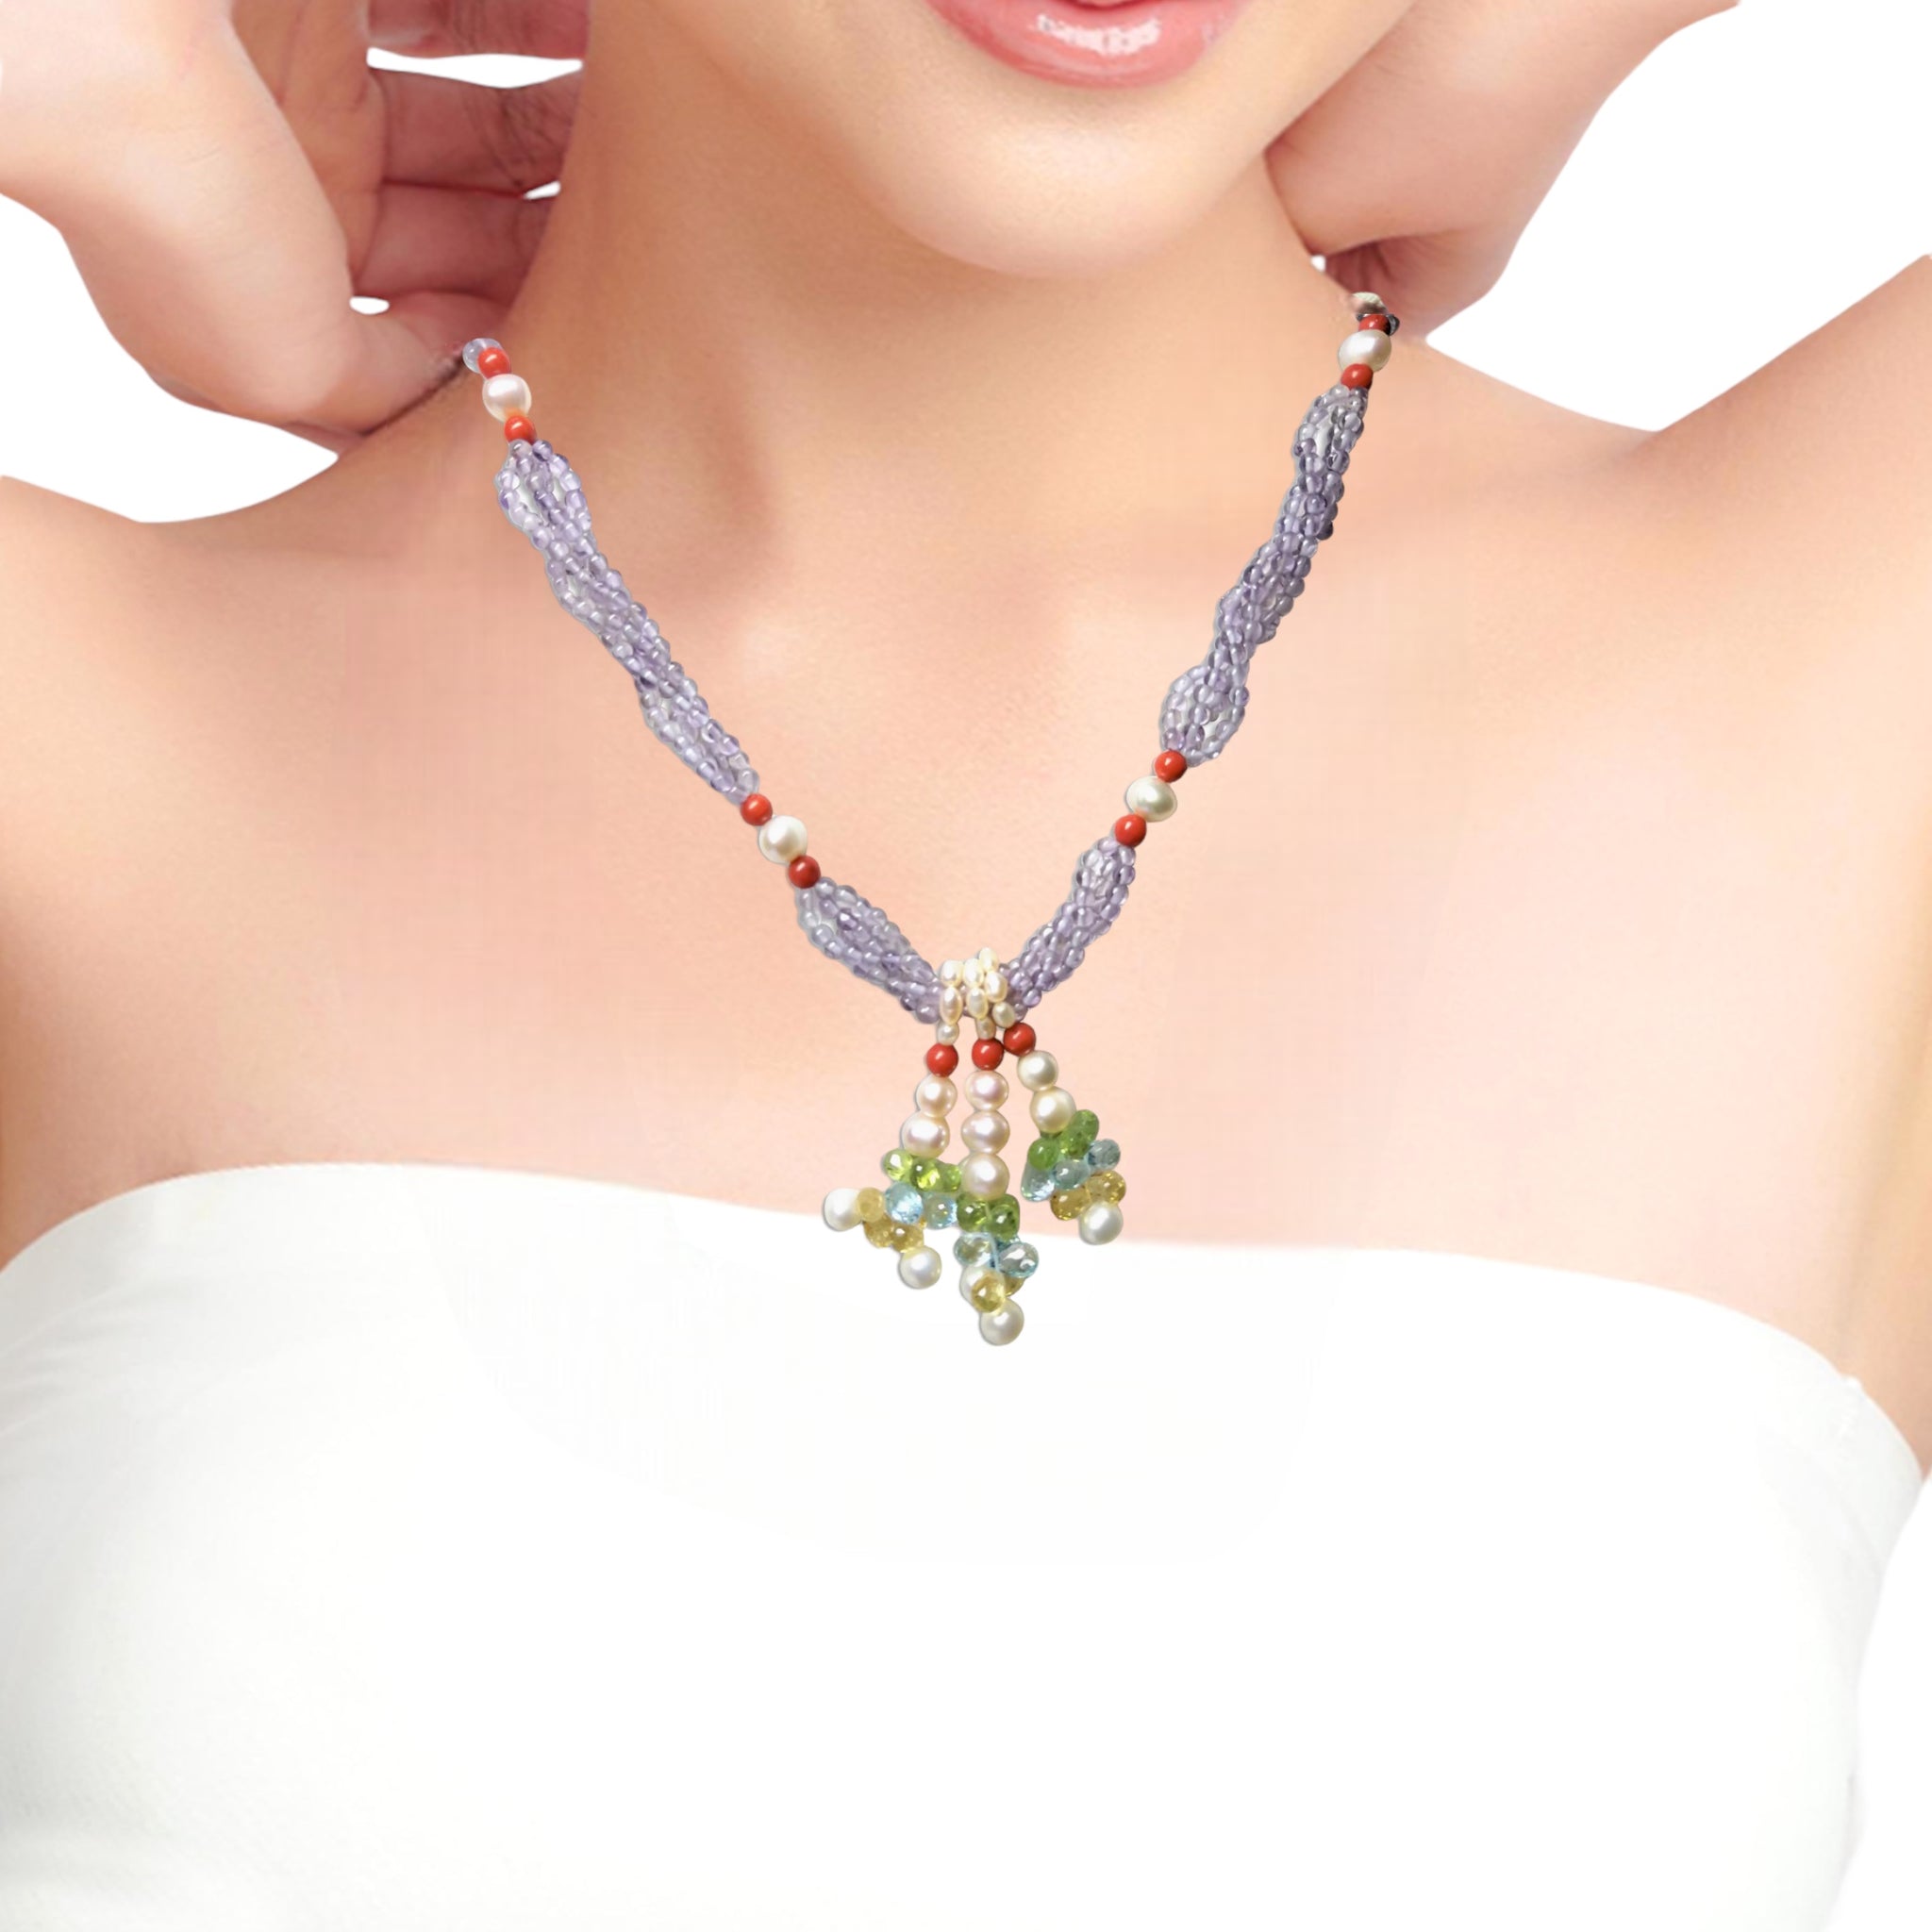 Natural Handmade Necklace 16"-18" Amethyst, Citrine, Peridot, Pearls Gemstone Beads Jewelry